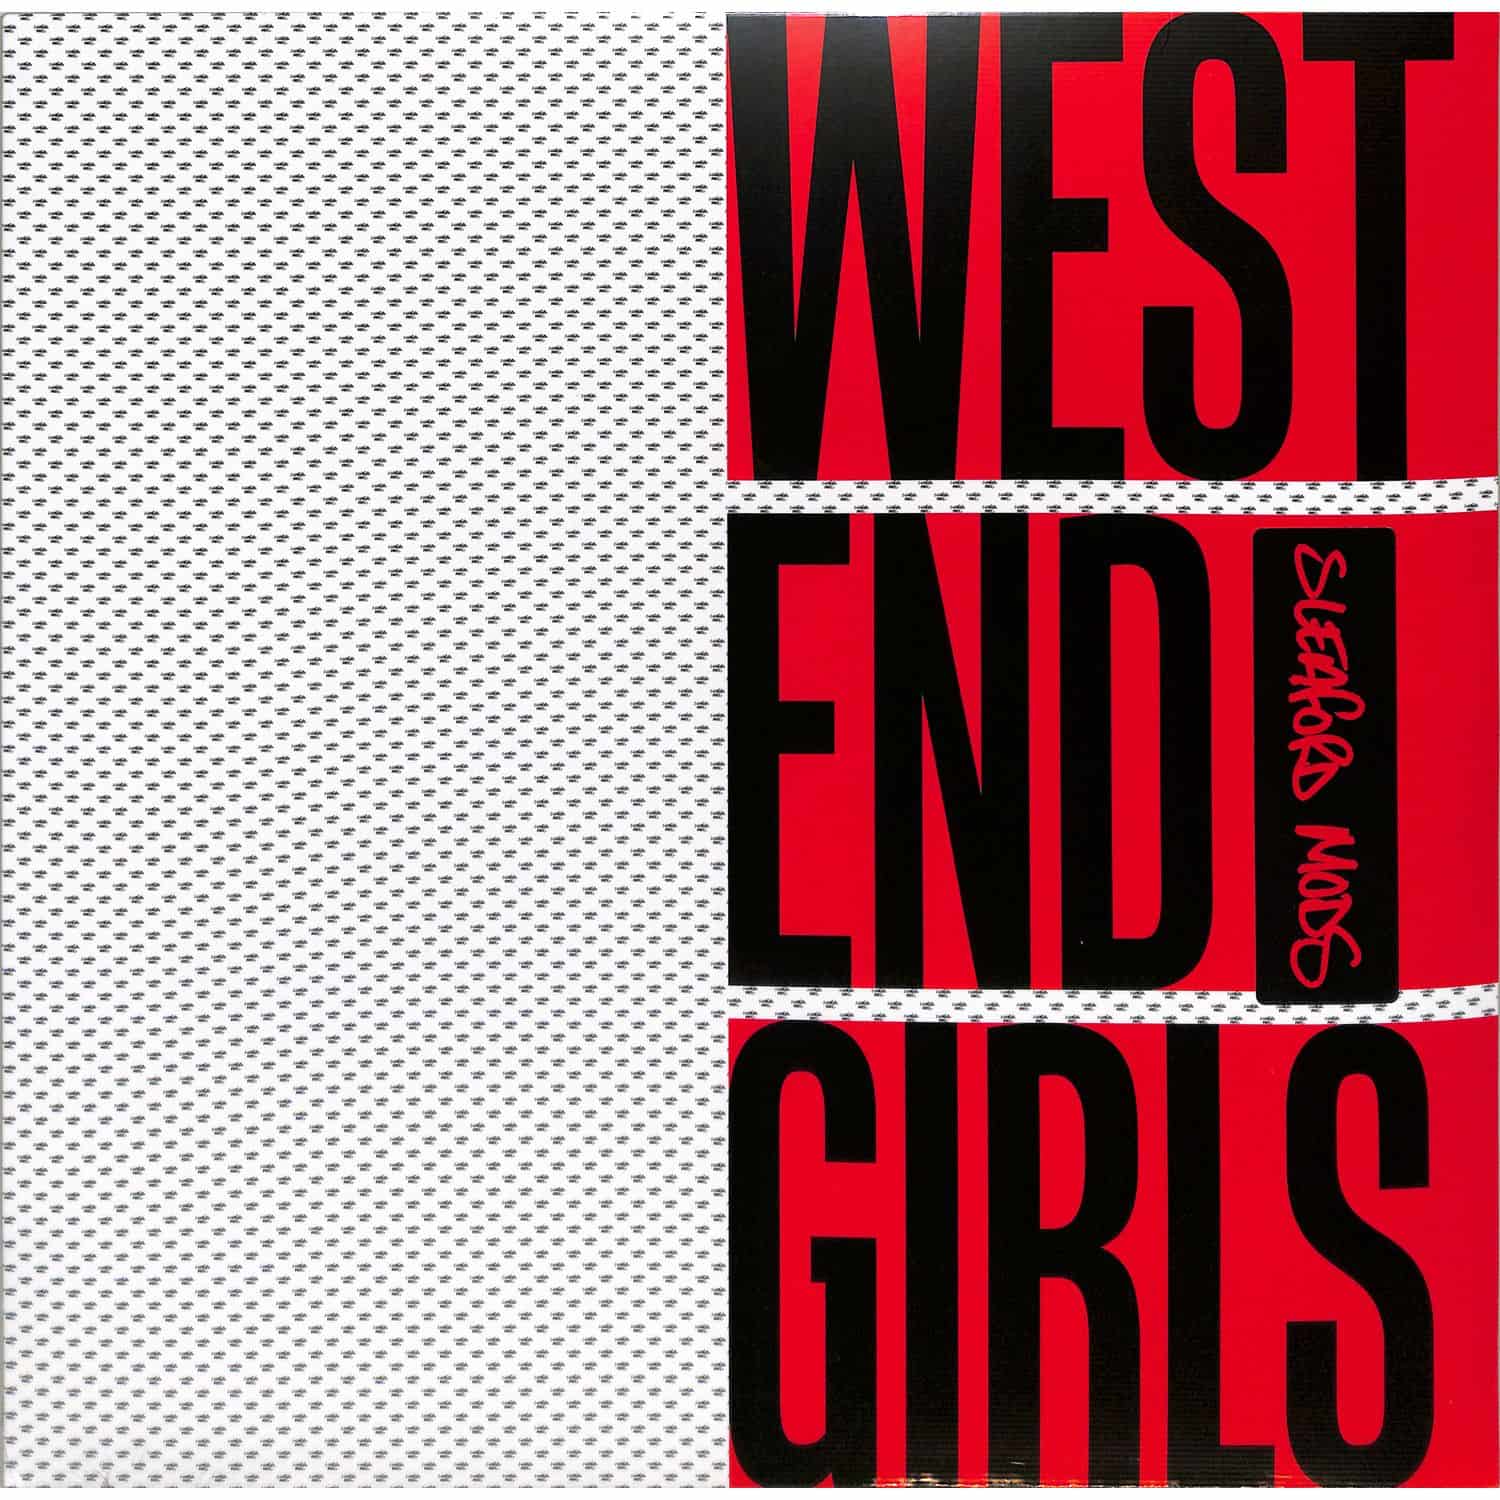 Sleaford Mods - WEST END GIRLS